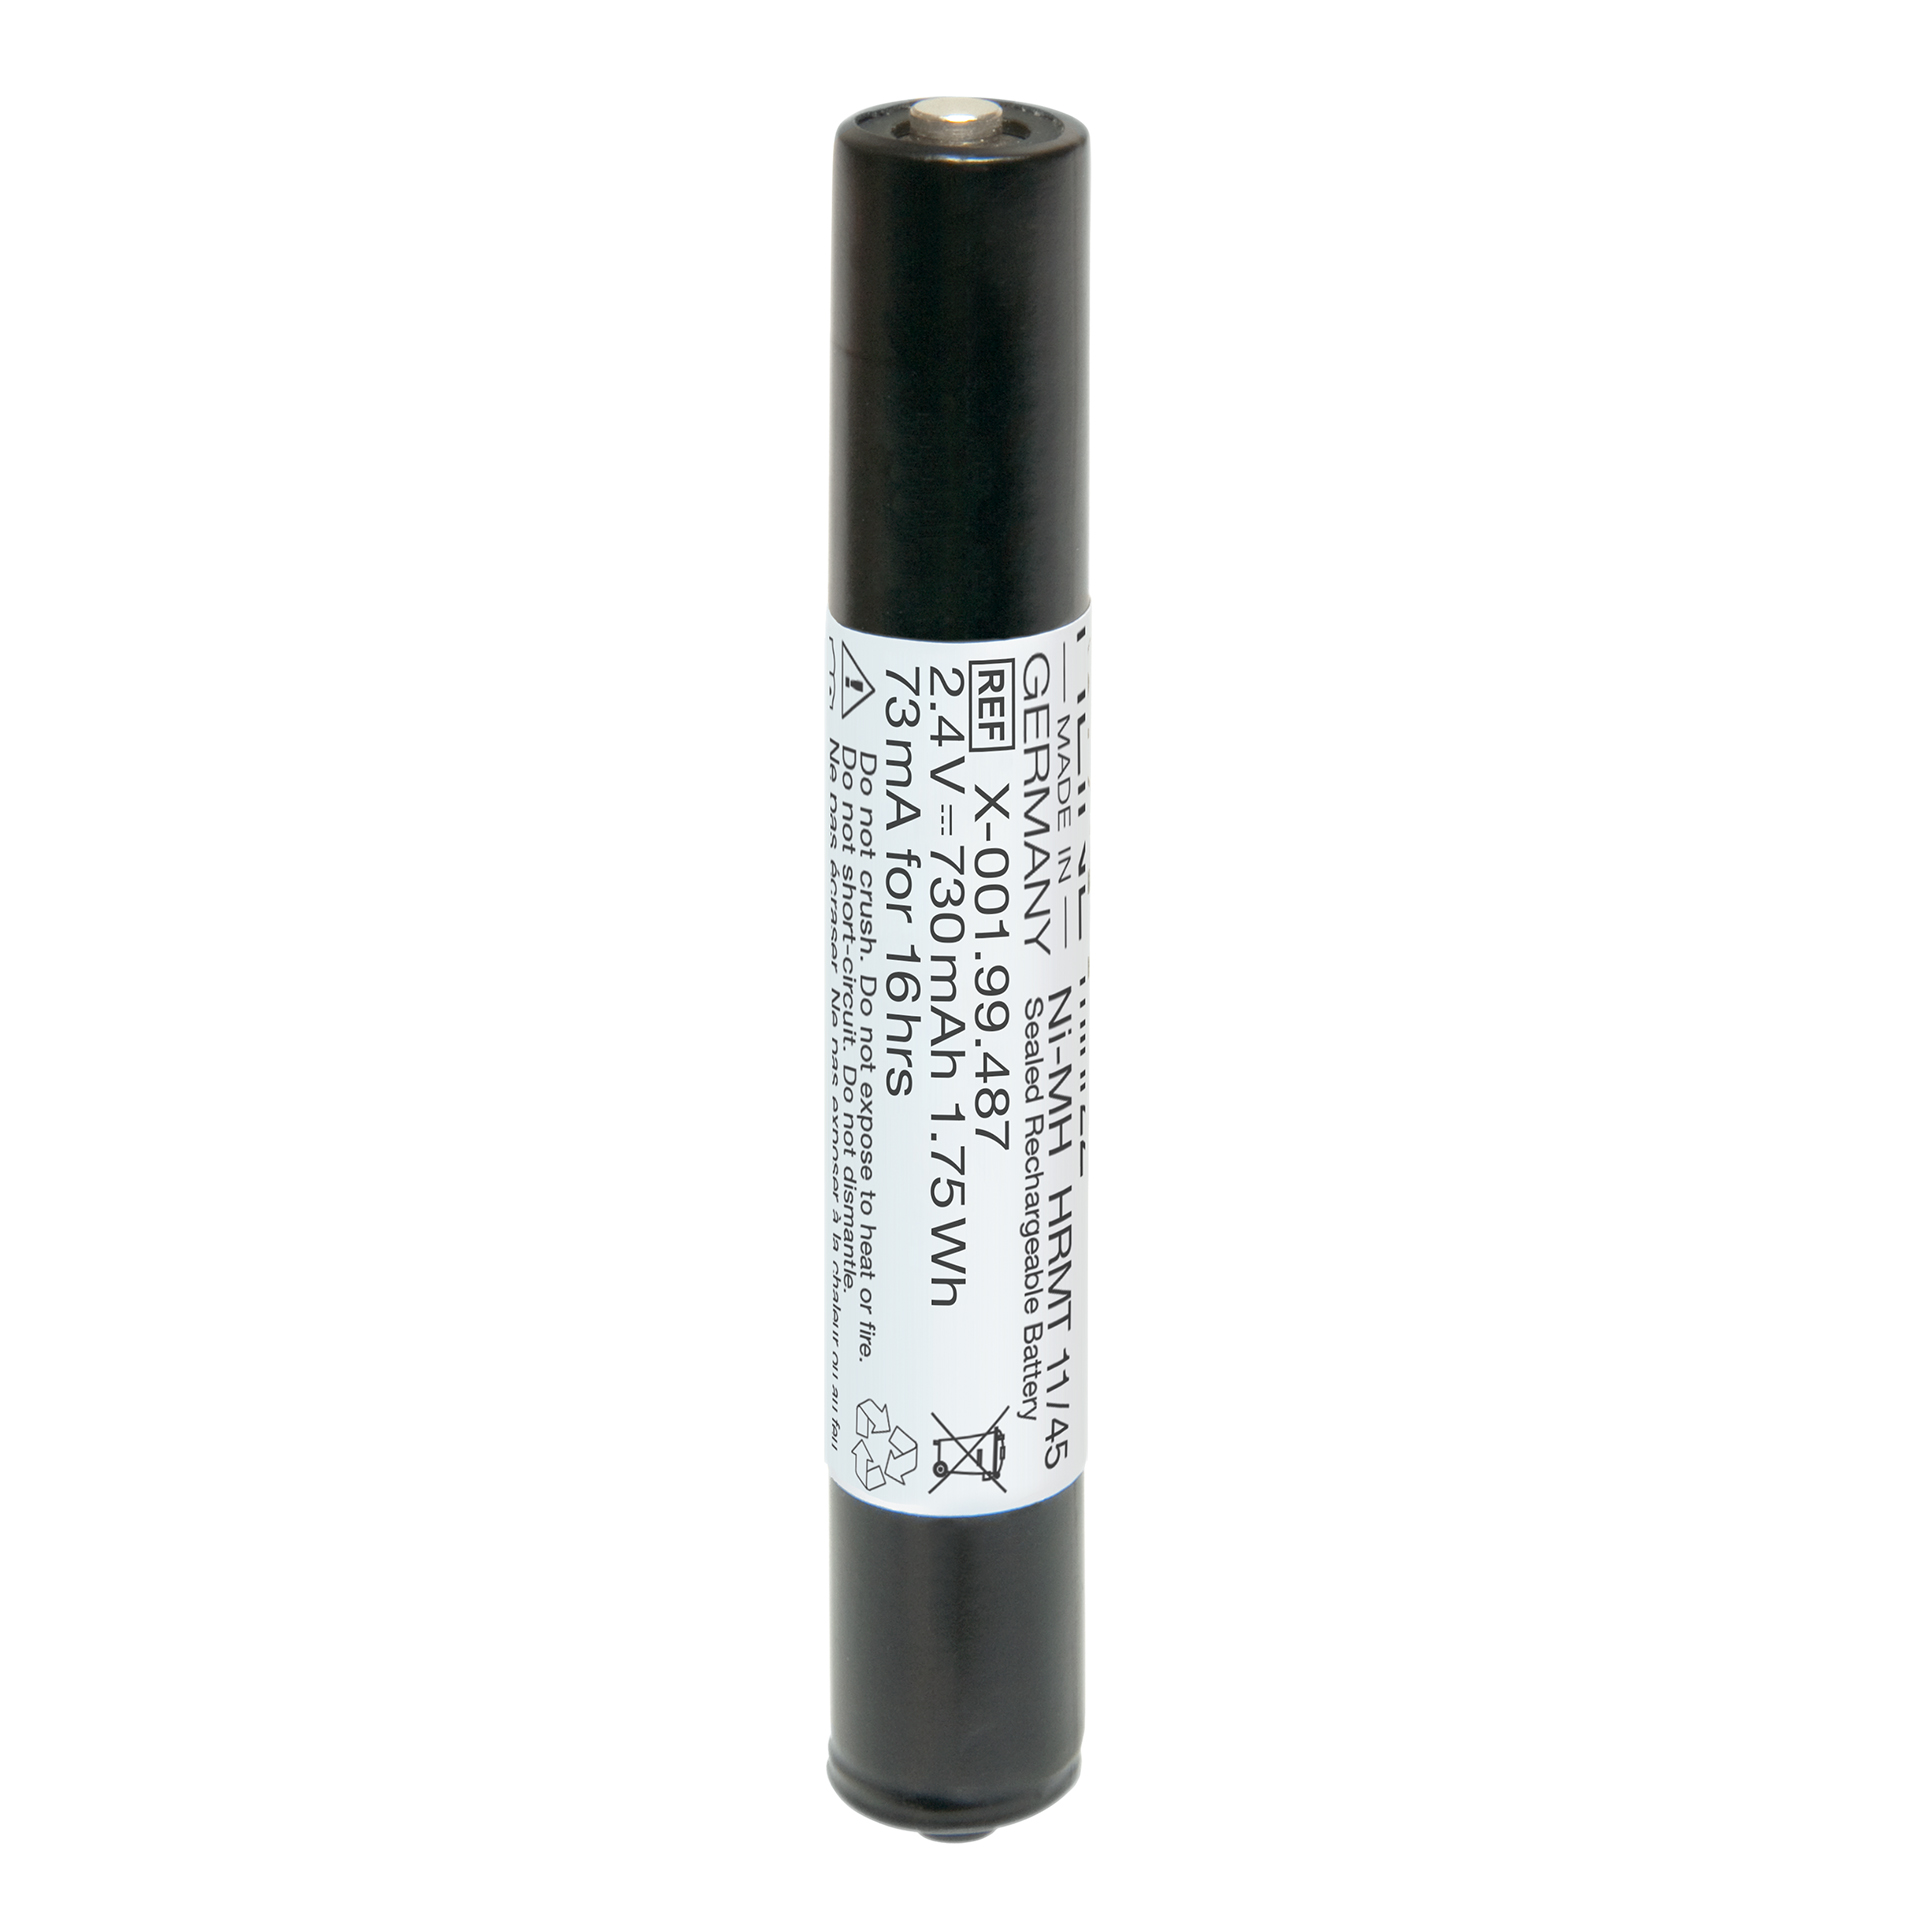 Batteria ricaricabile HEINE 2Z 2,5 V NiMH